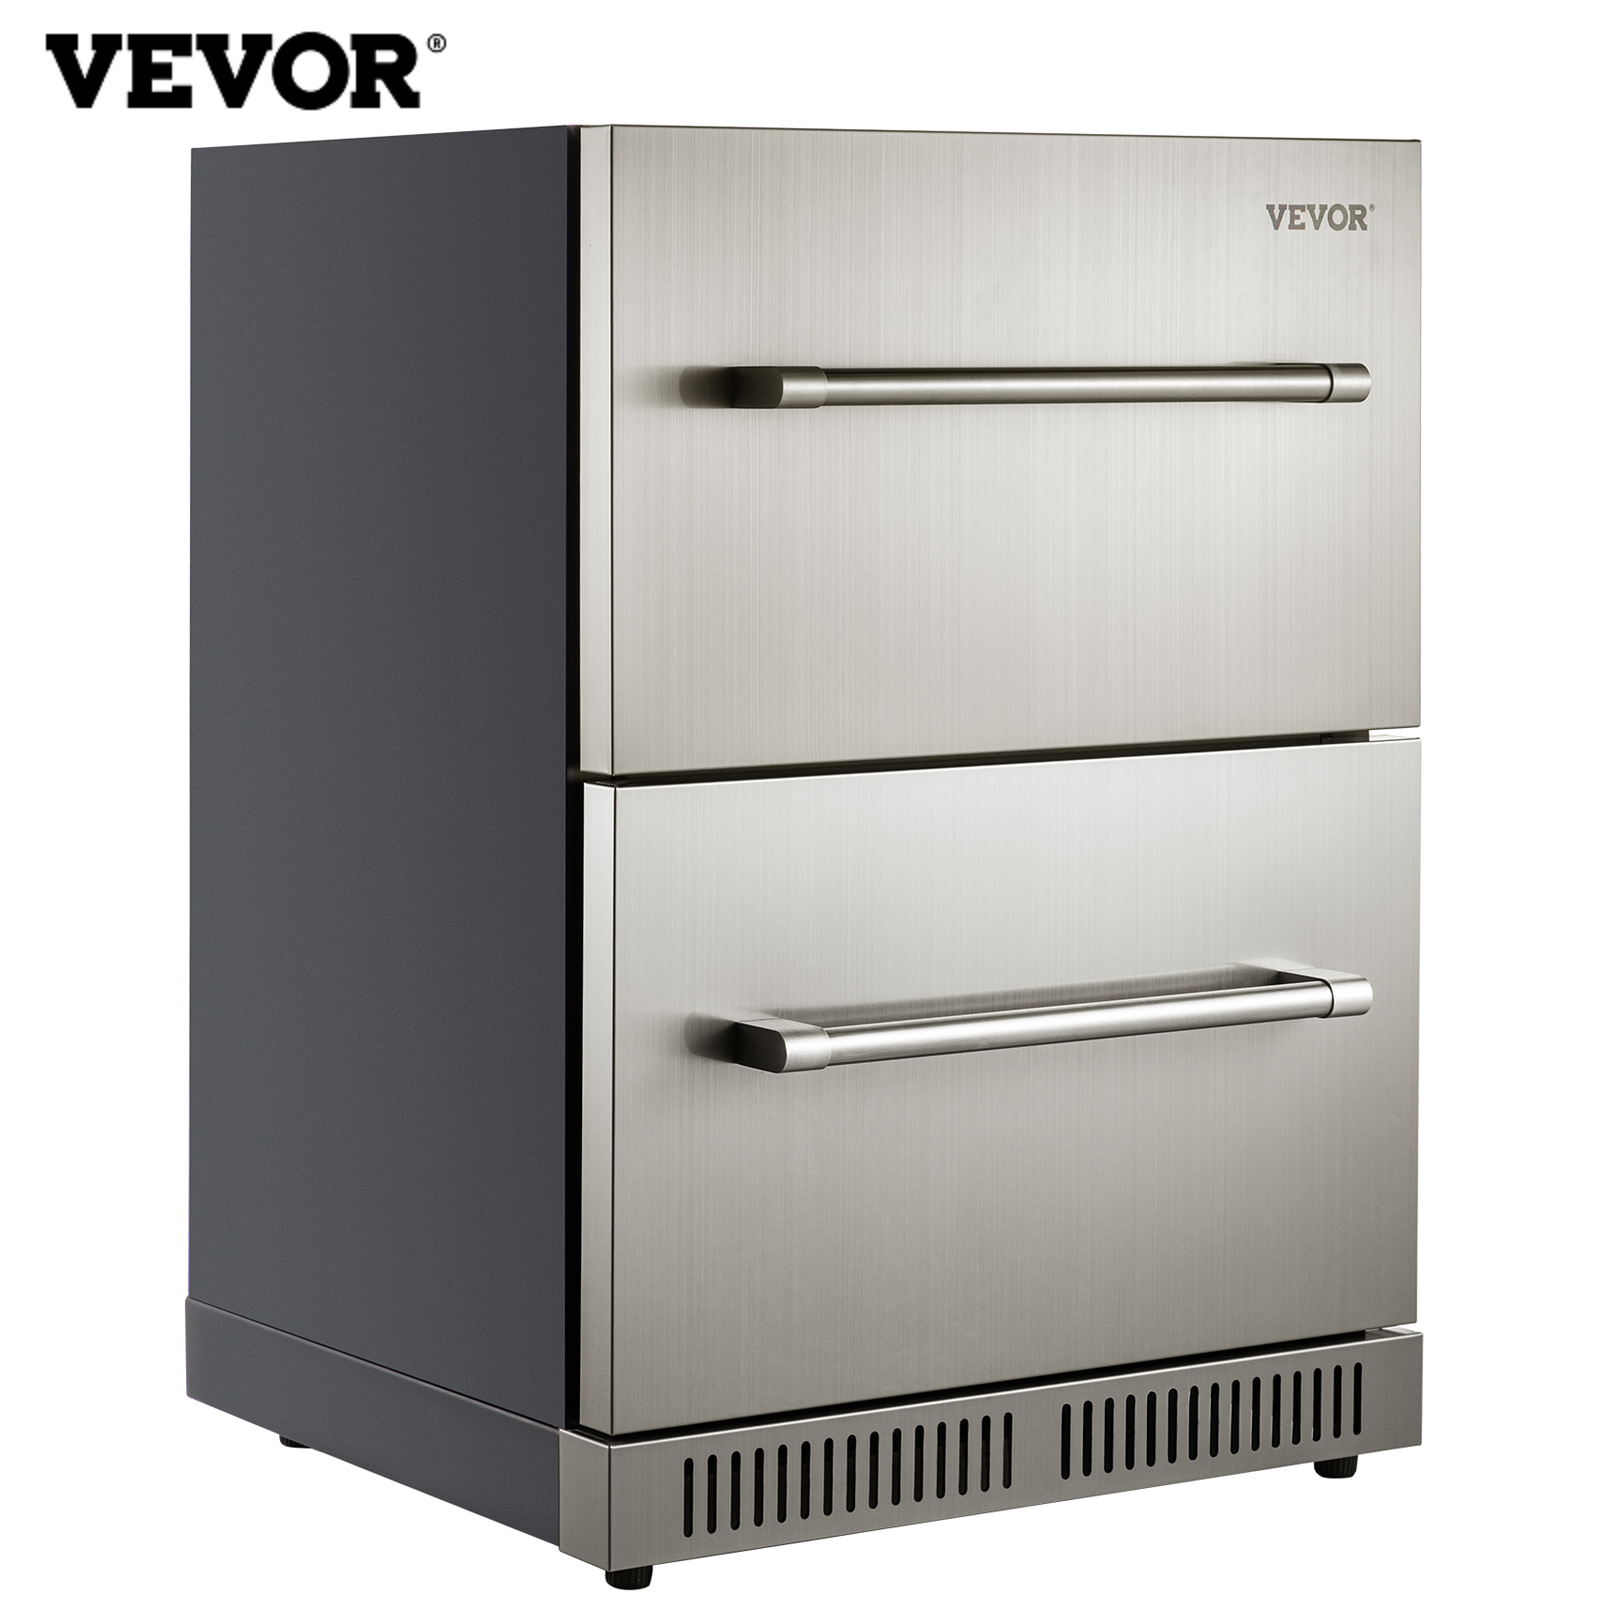 VEVOR Under counter Refrigerator Builtin Double Drawer Refrigerator 24